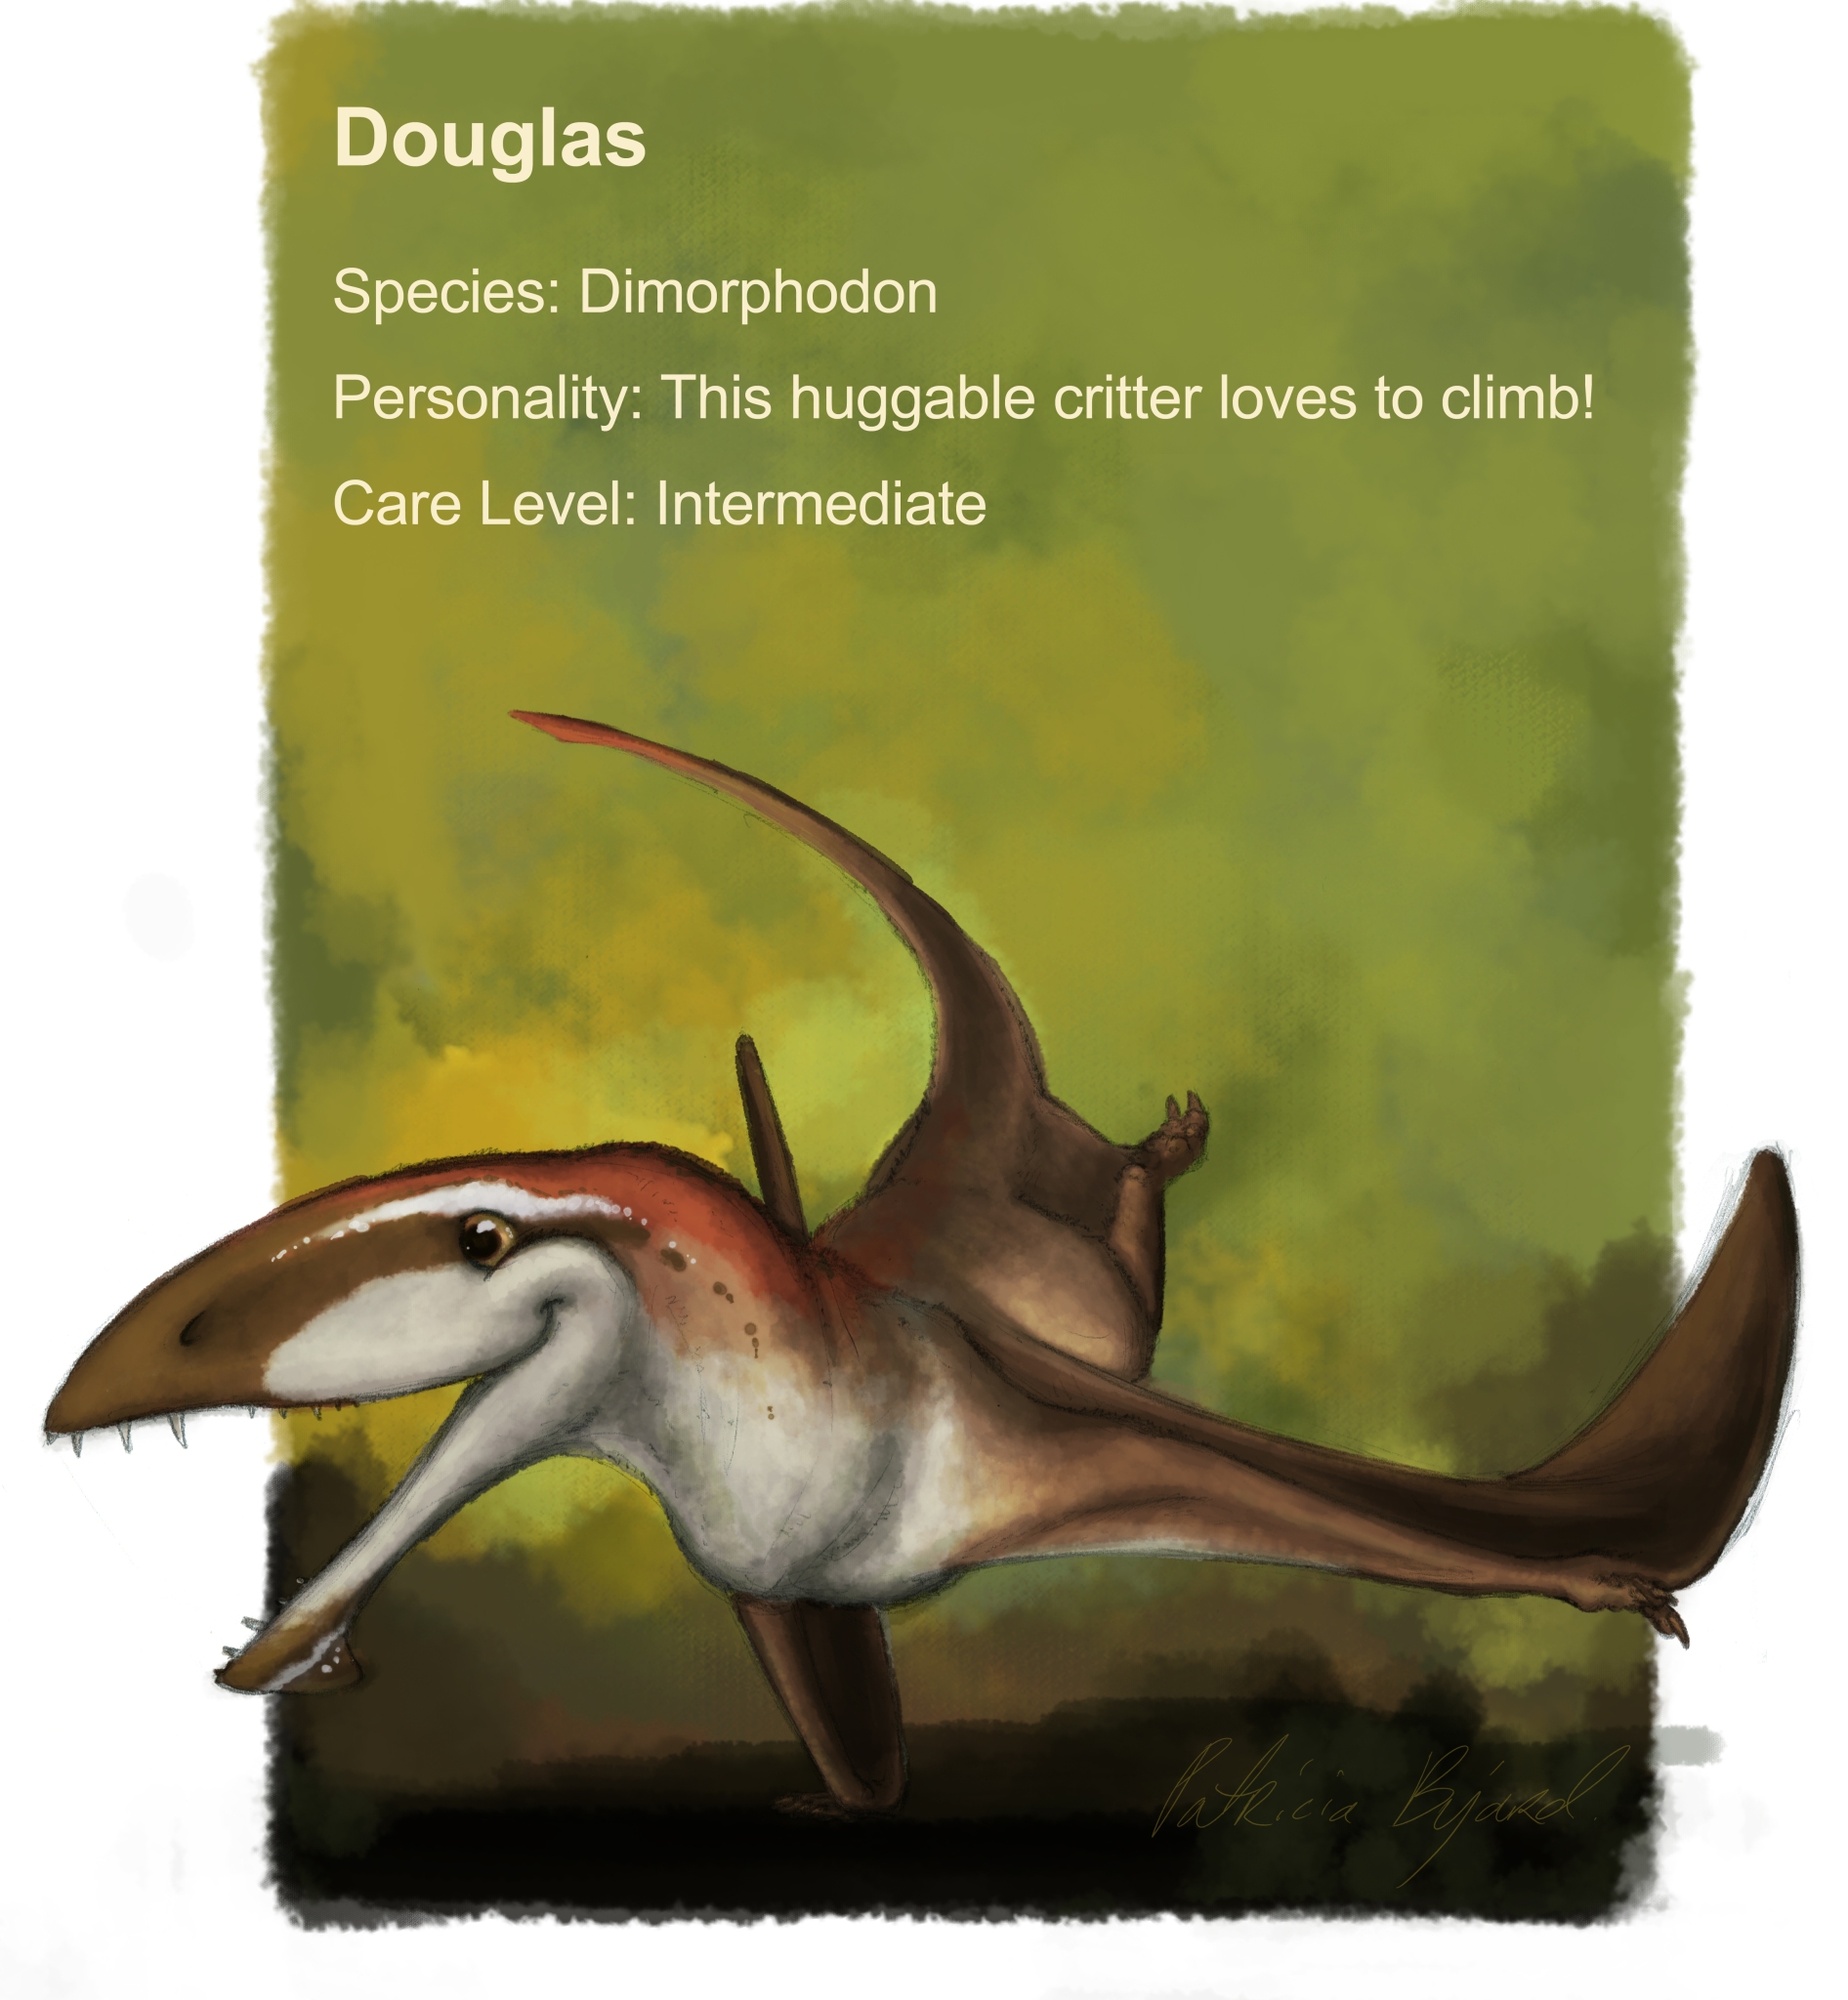 douglas-profile-update_website.jpg